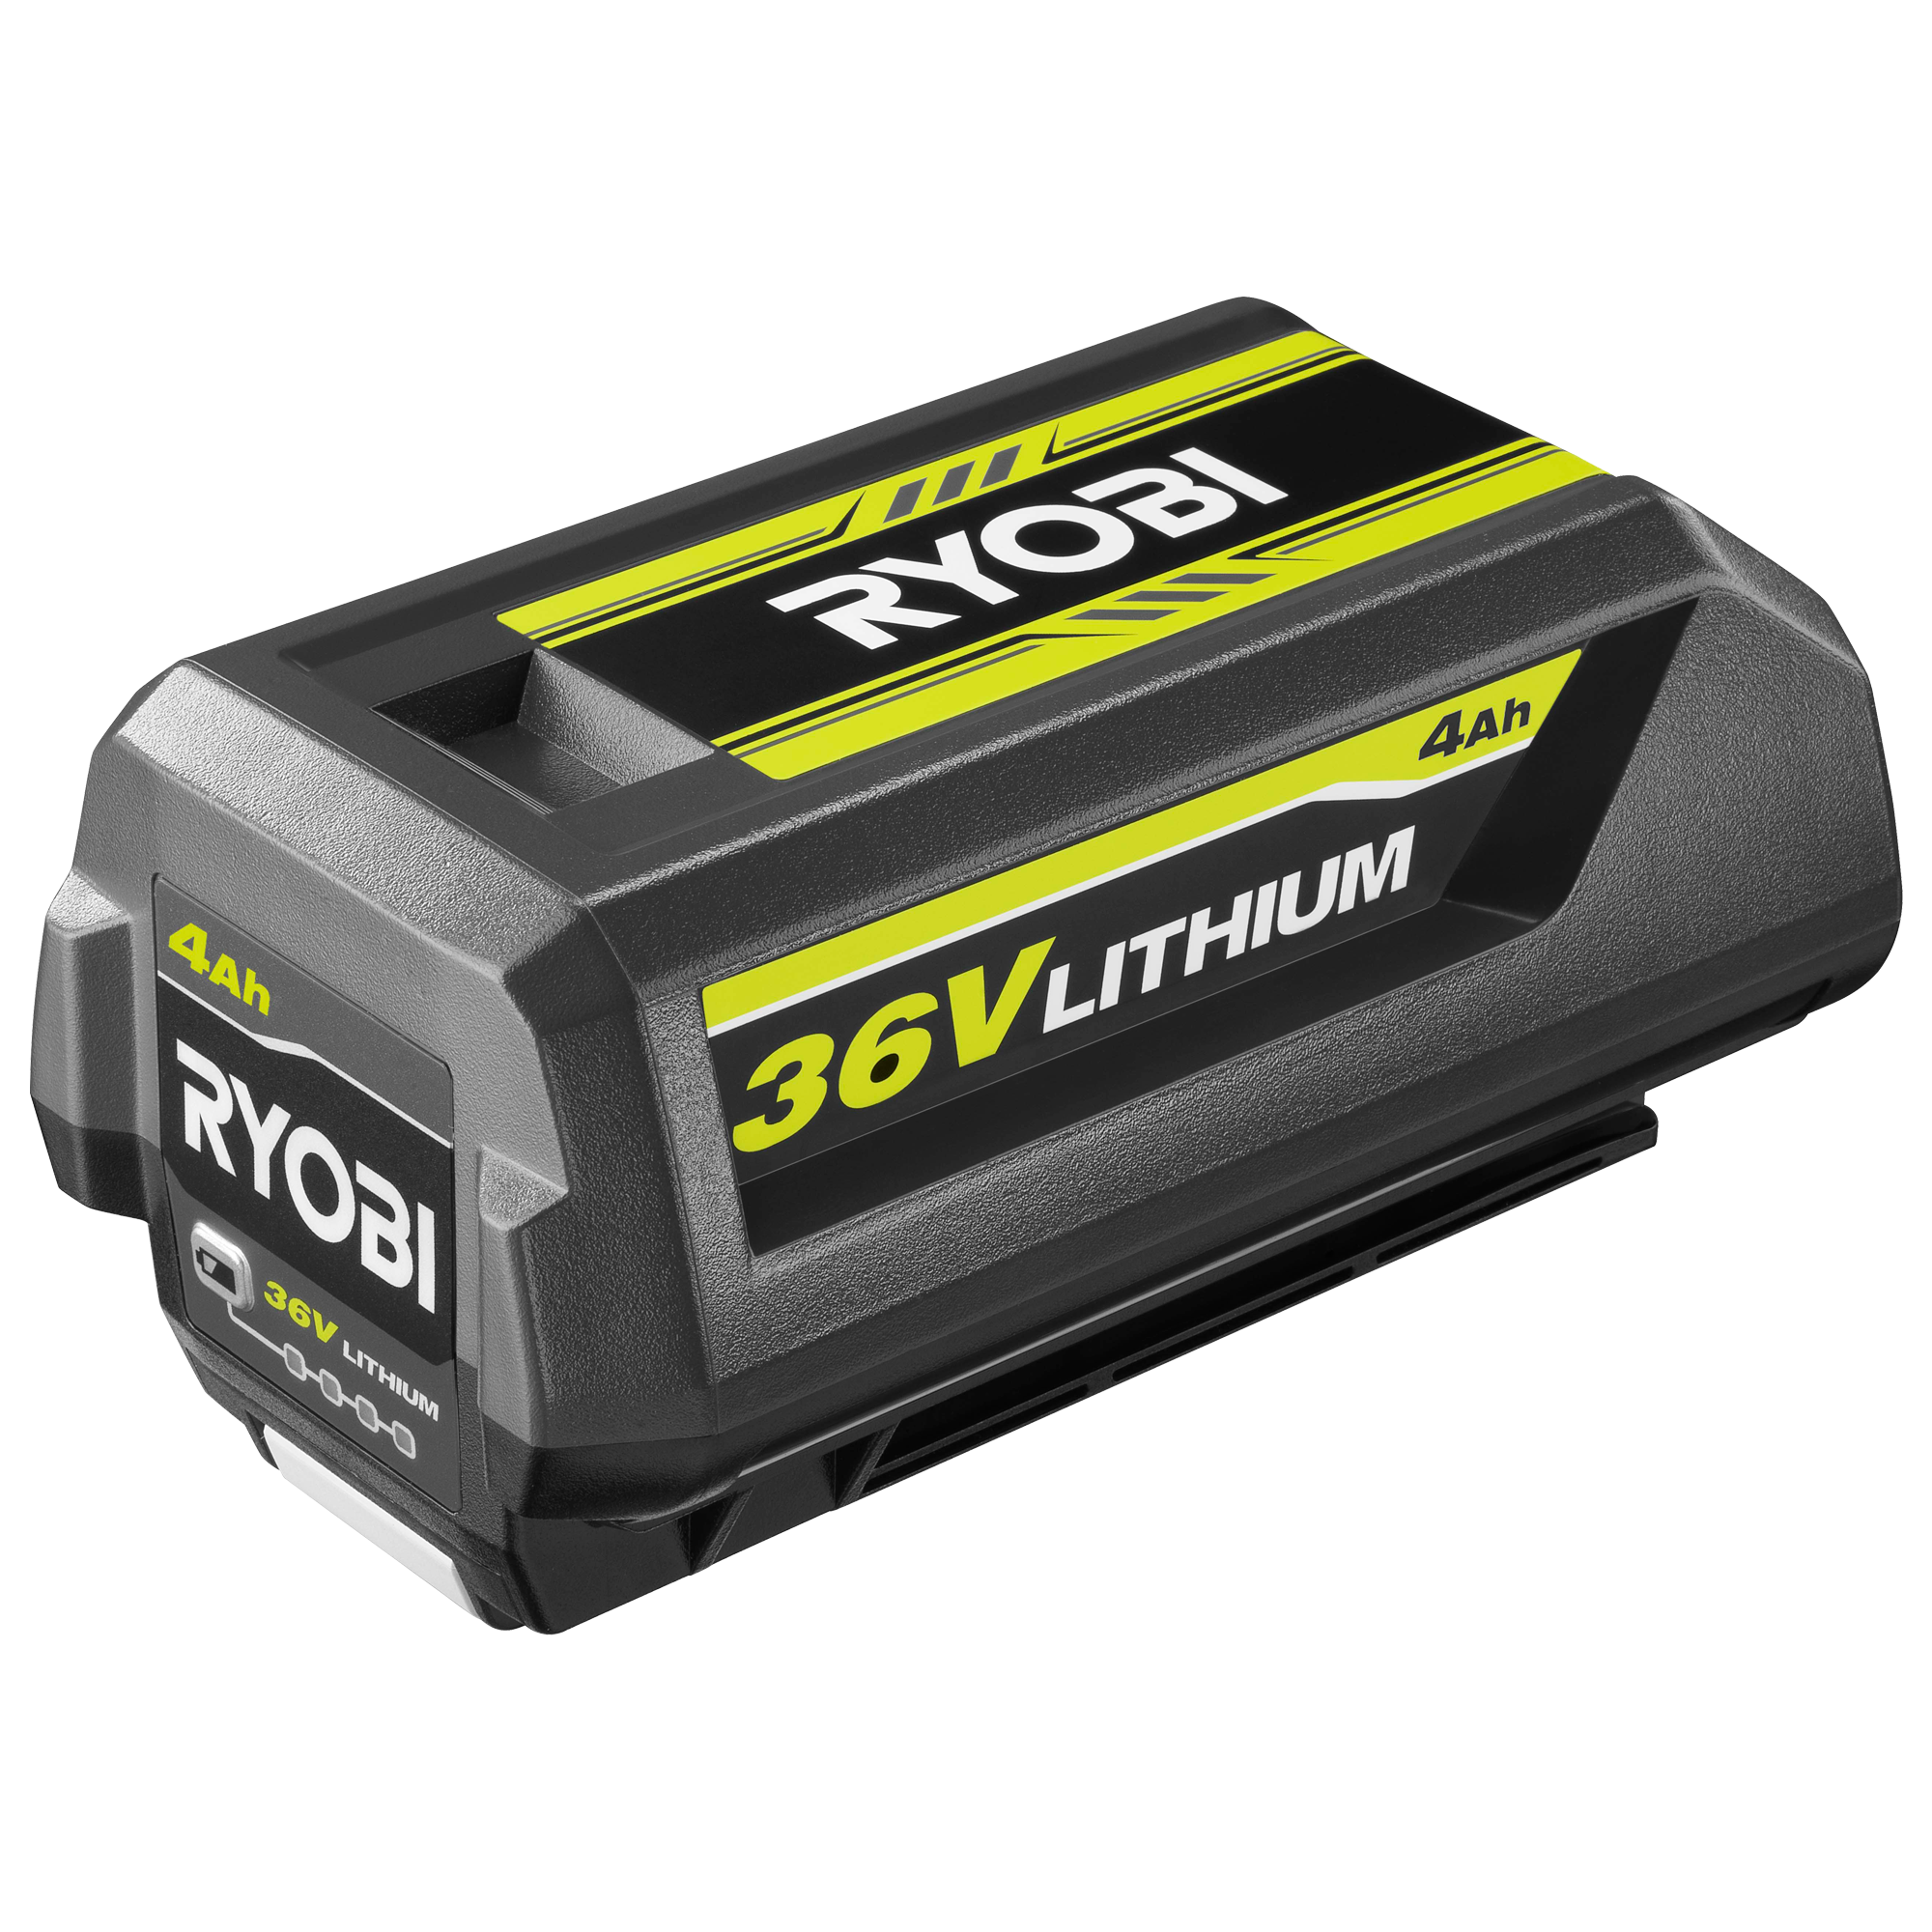 Lithium LiFe 4Ah Battery